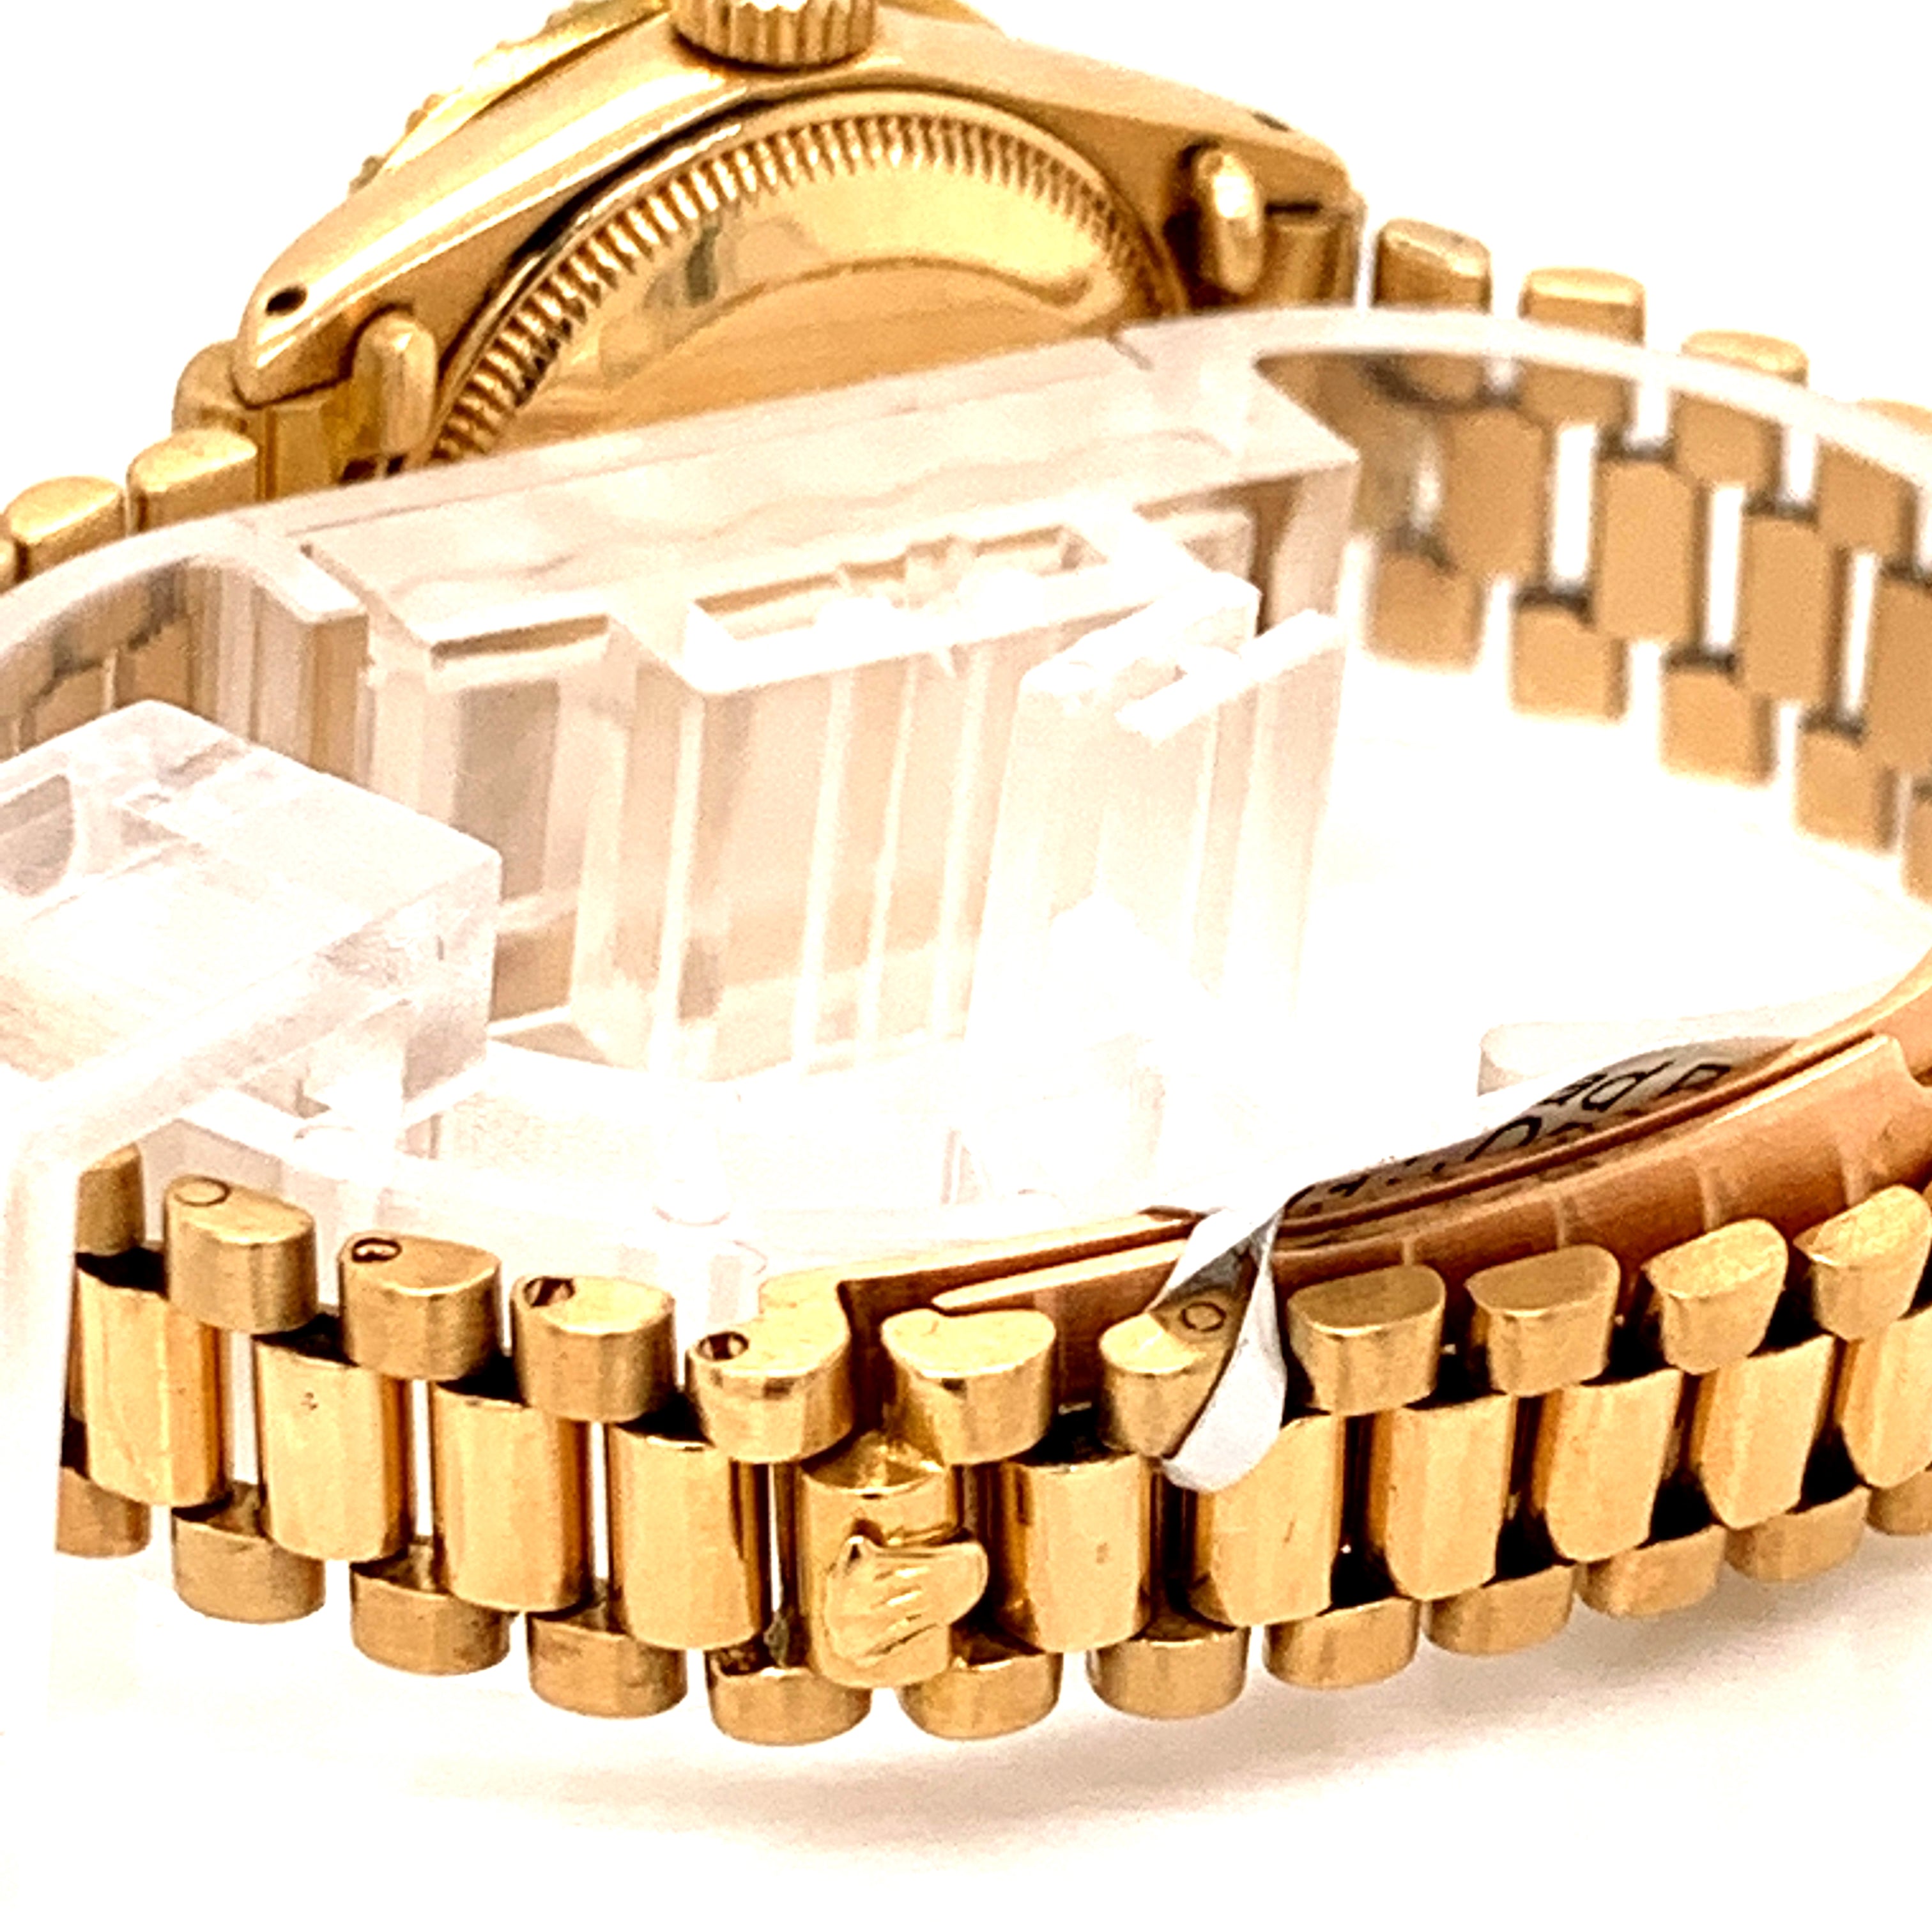 Rolex strap in 18k yellow gold - Catawiki